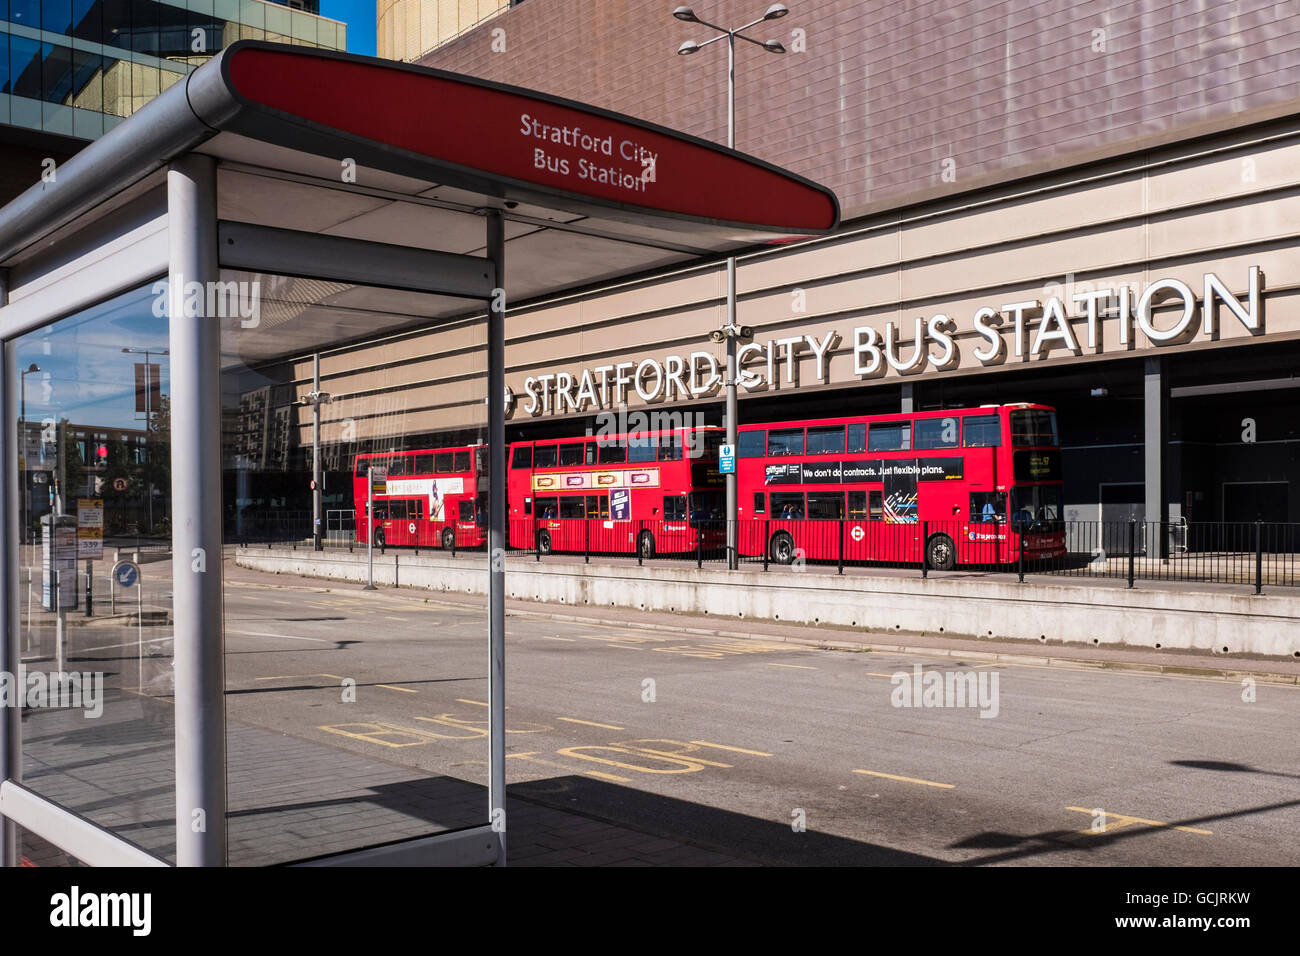 Stratford City Bus Station, London, England, U.K Stock Photo - Alamy